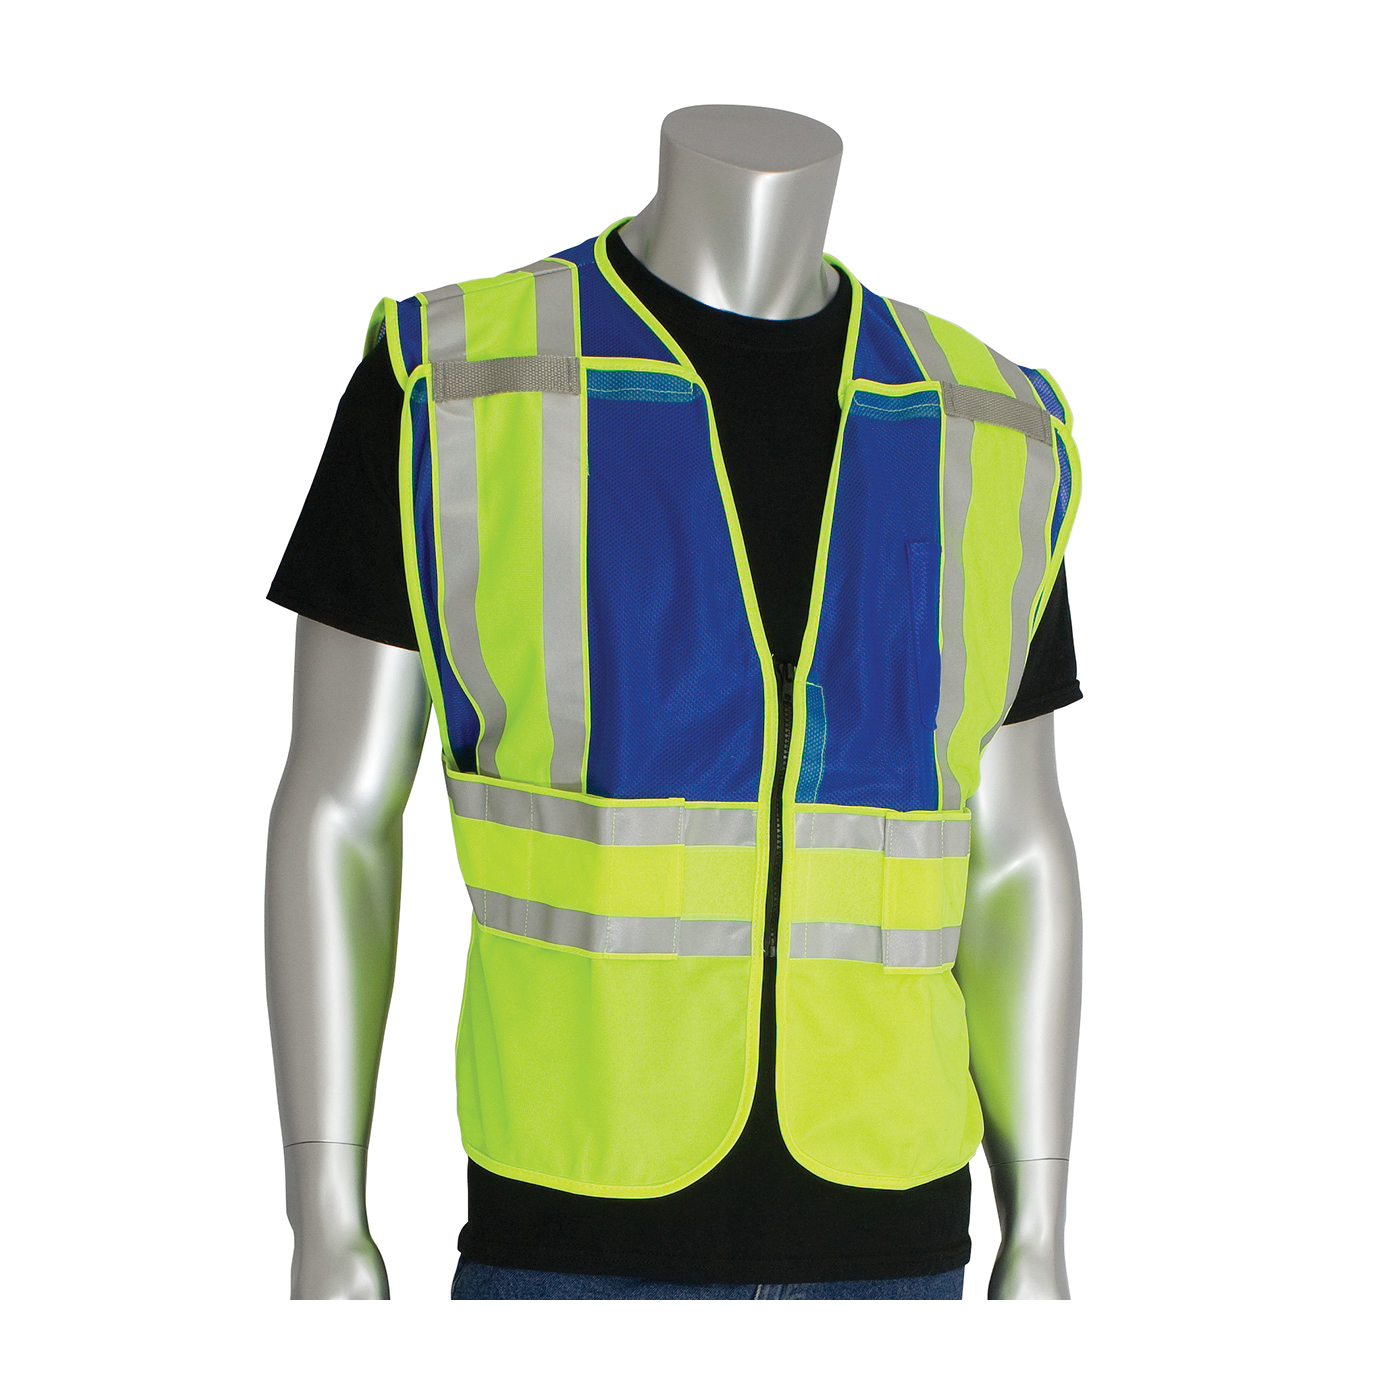 PIP® SafetyGear 302-PSV-BLU-NL-2X/5X Public Safety Vest, 2XL/5XL, Blue/Hi-Viz Lime Yellow, Polyester, Front Zipper Closure, 2 Pockets, ANSI Class: Class 2, ANSI 107 Type P